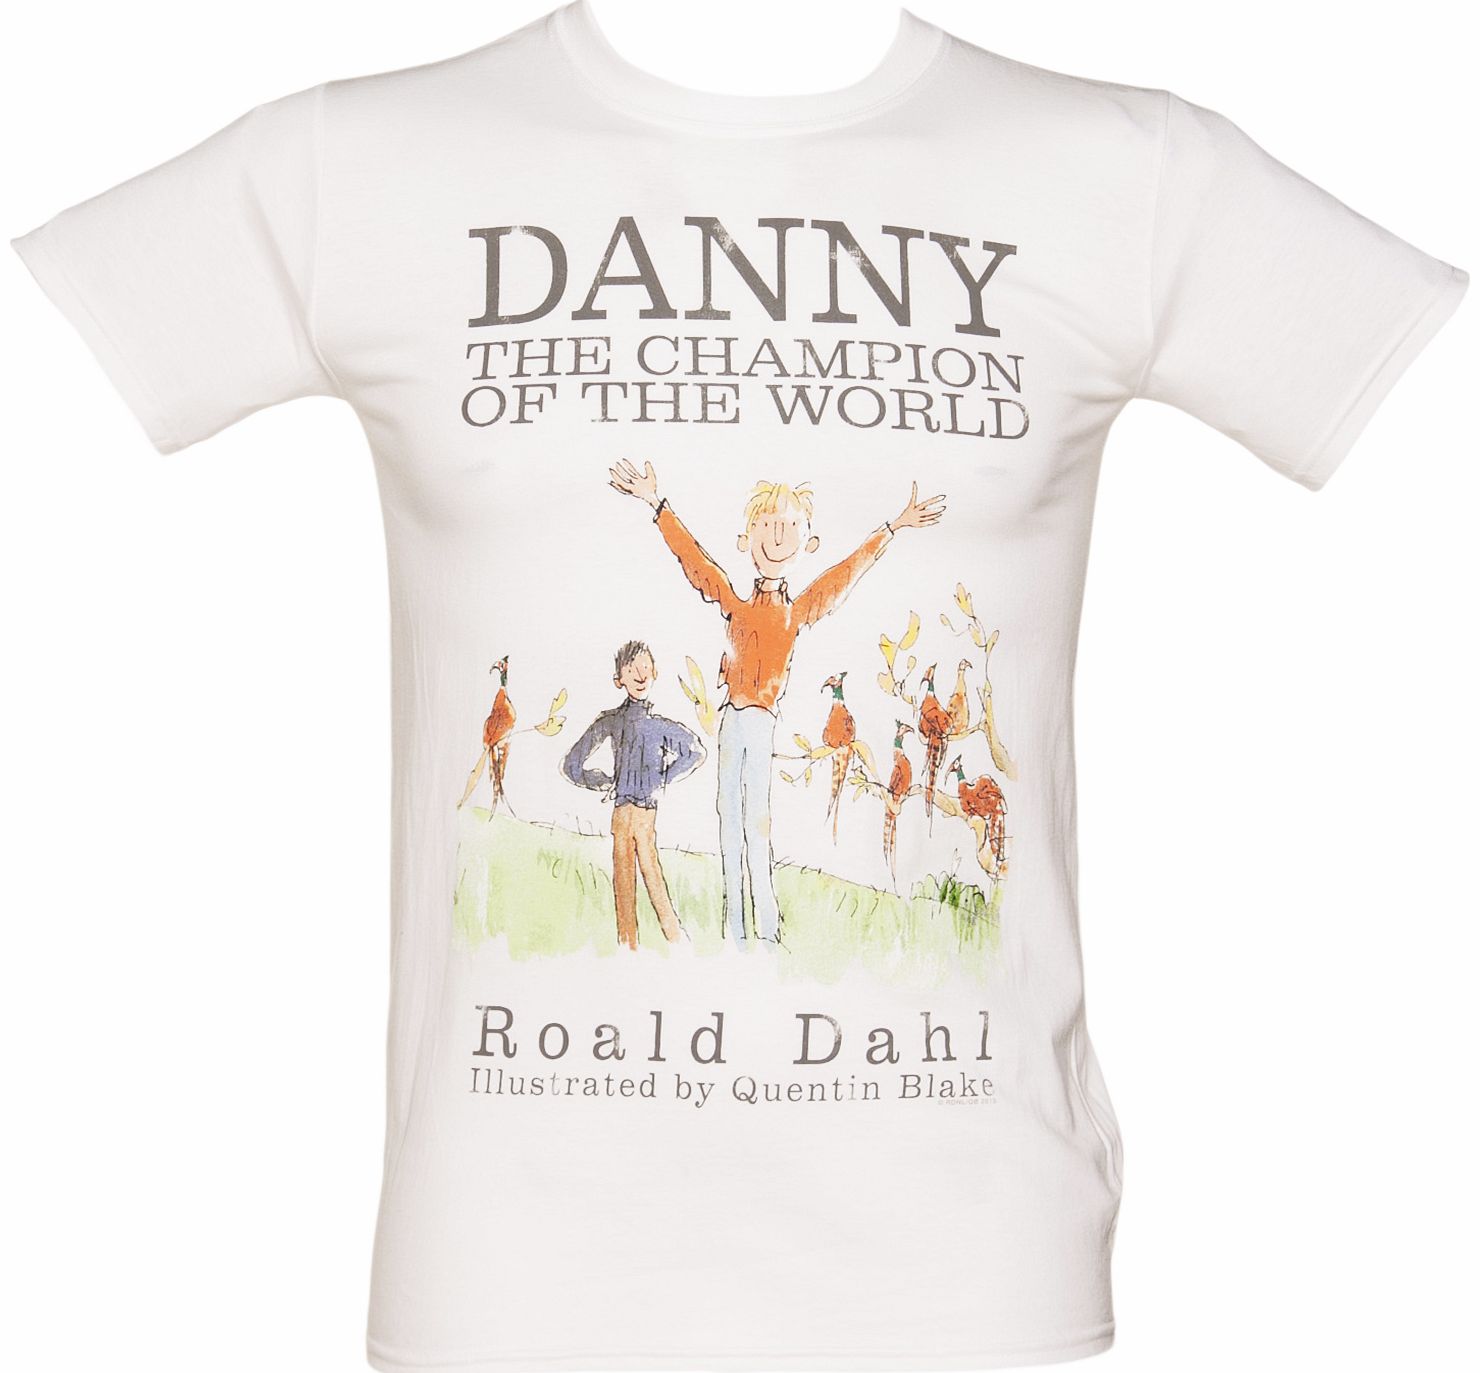 Mens Roald Dahl Danny The Champion of the World